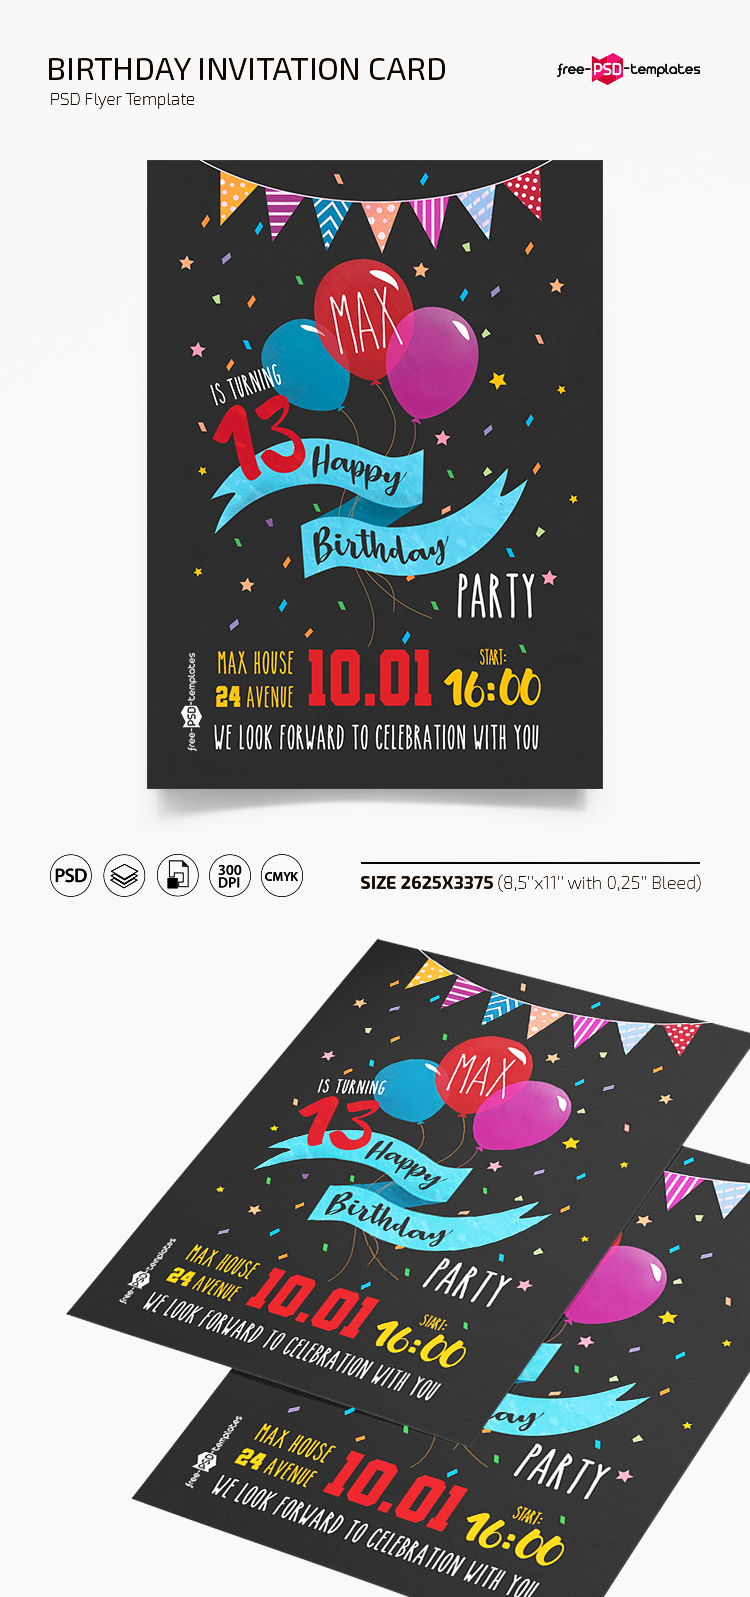 birthday invitation card template free download